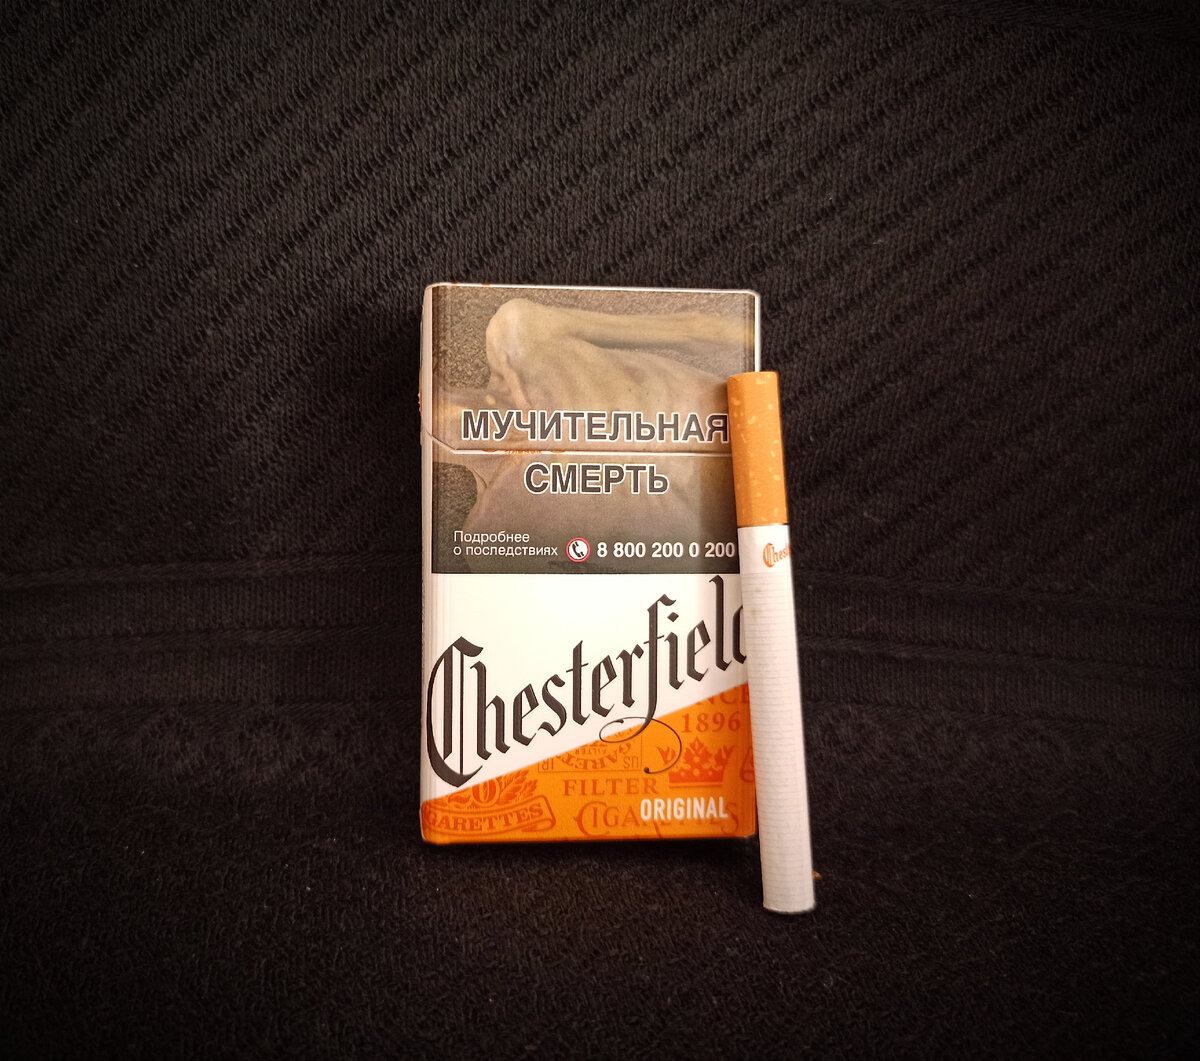 Купить сигареты честерфилд. Сигареты Честерфилд Original. Chesterfield Original оранжевый. Сигареты Честерфилд оригинал оранжевый. Сигареты Честерфилд Селекшн компакт.